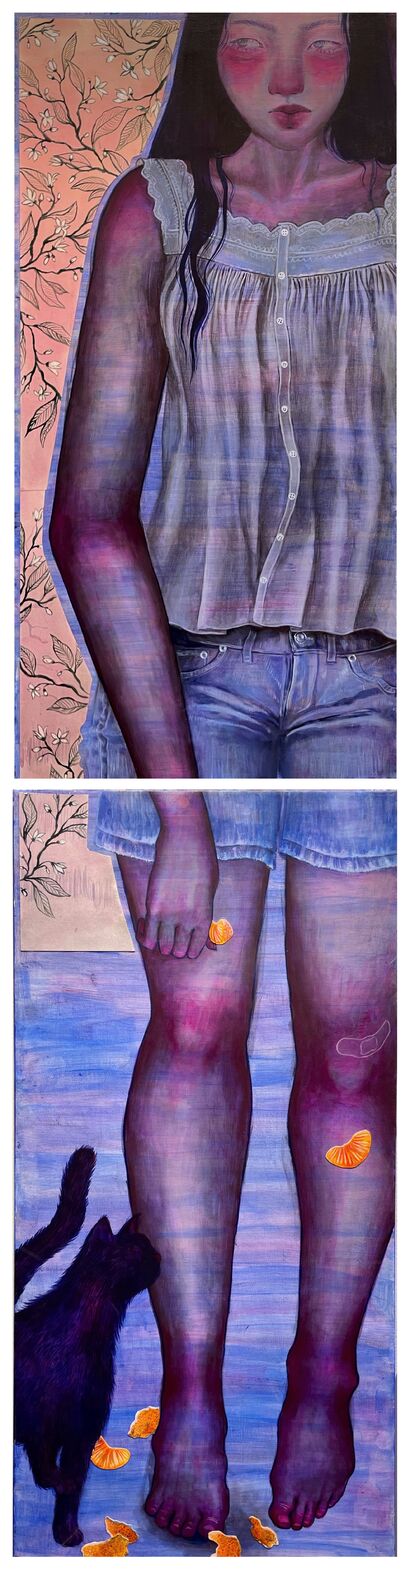 Essence of Girl - a Paint Artowrk by Natalia Cole